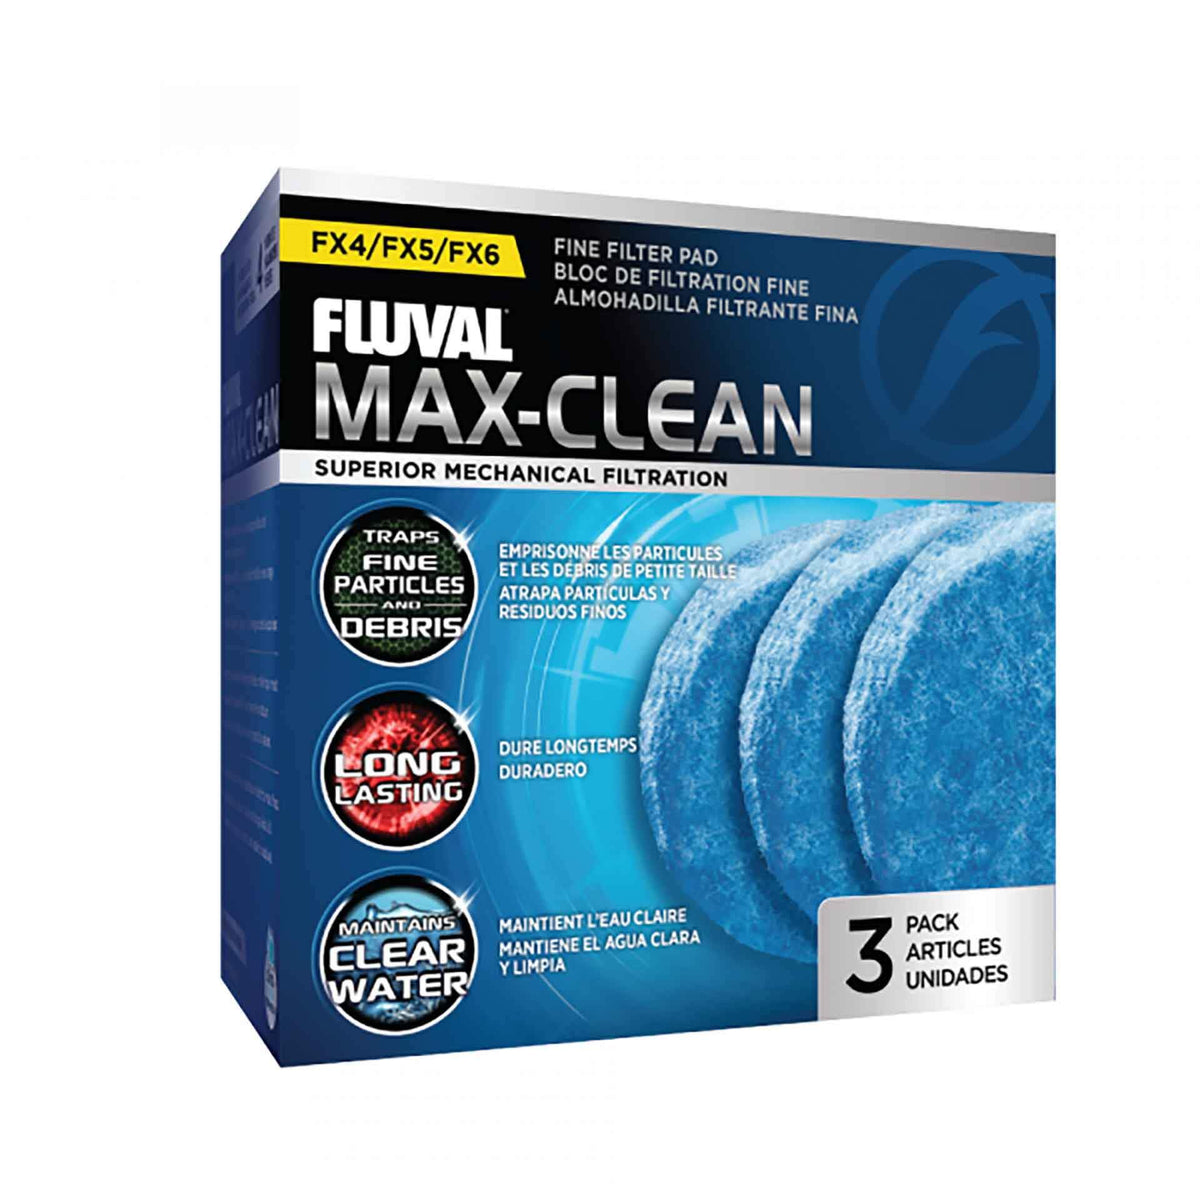 Fluval FX4/FX5/FX6 Fine Filter Pads (3 Pack) (Blue)